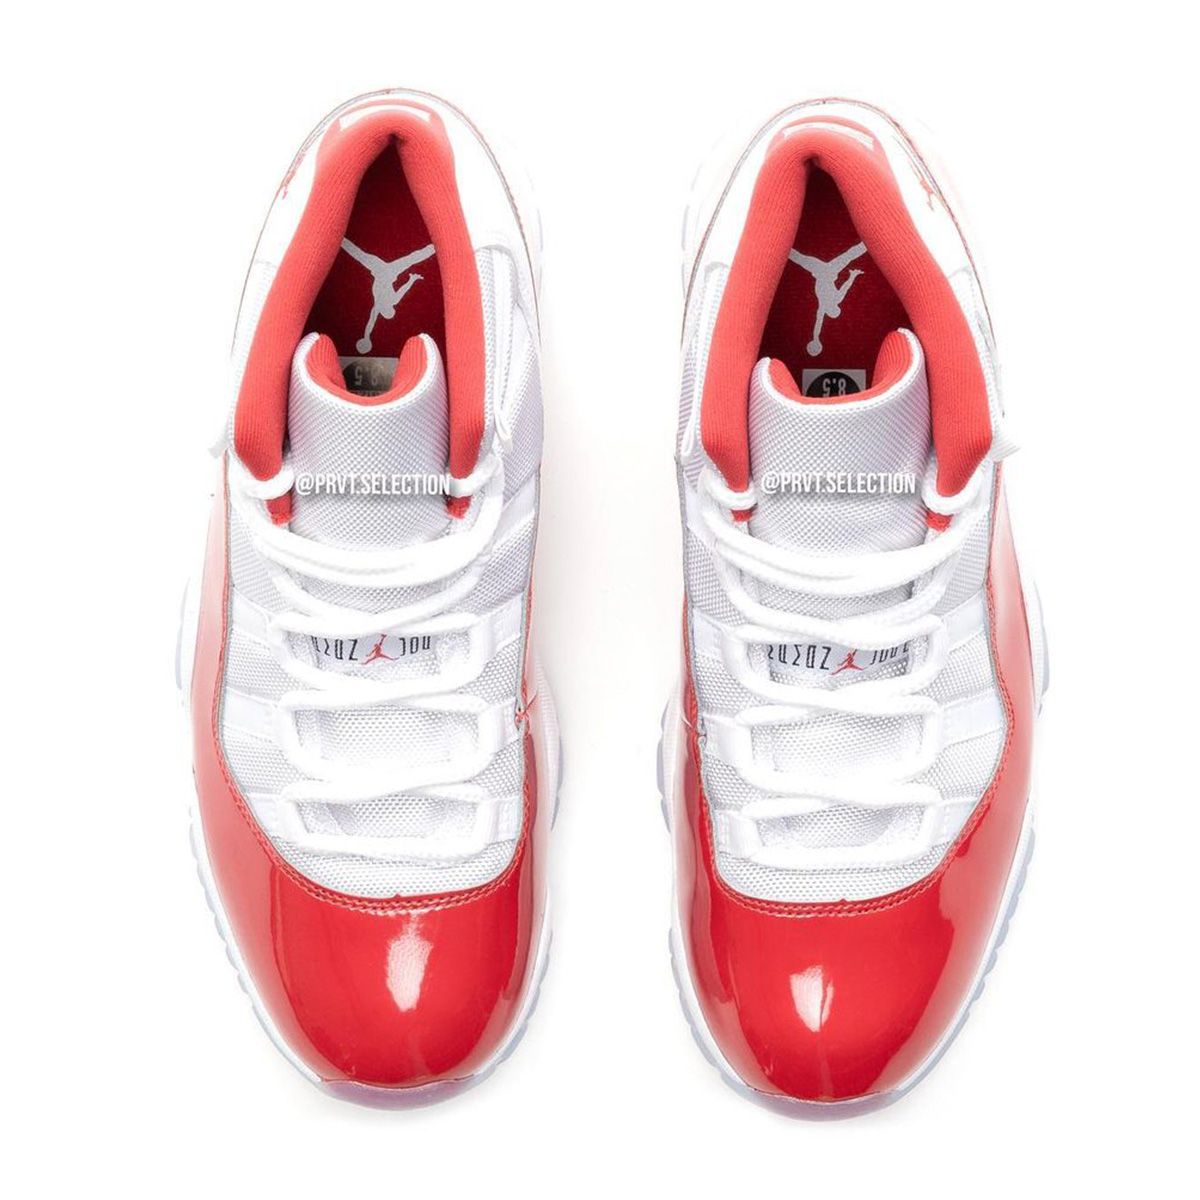 GOAT Announces Air Jordan 11 Retro Cherry Drop